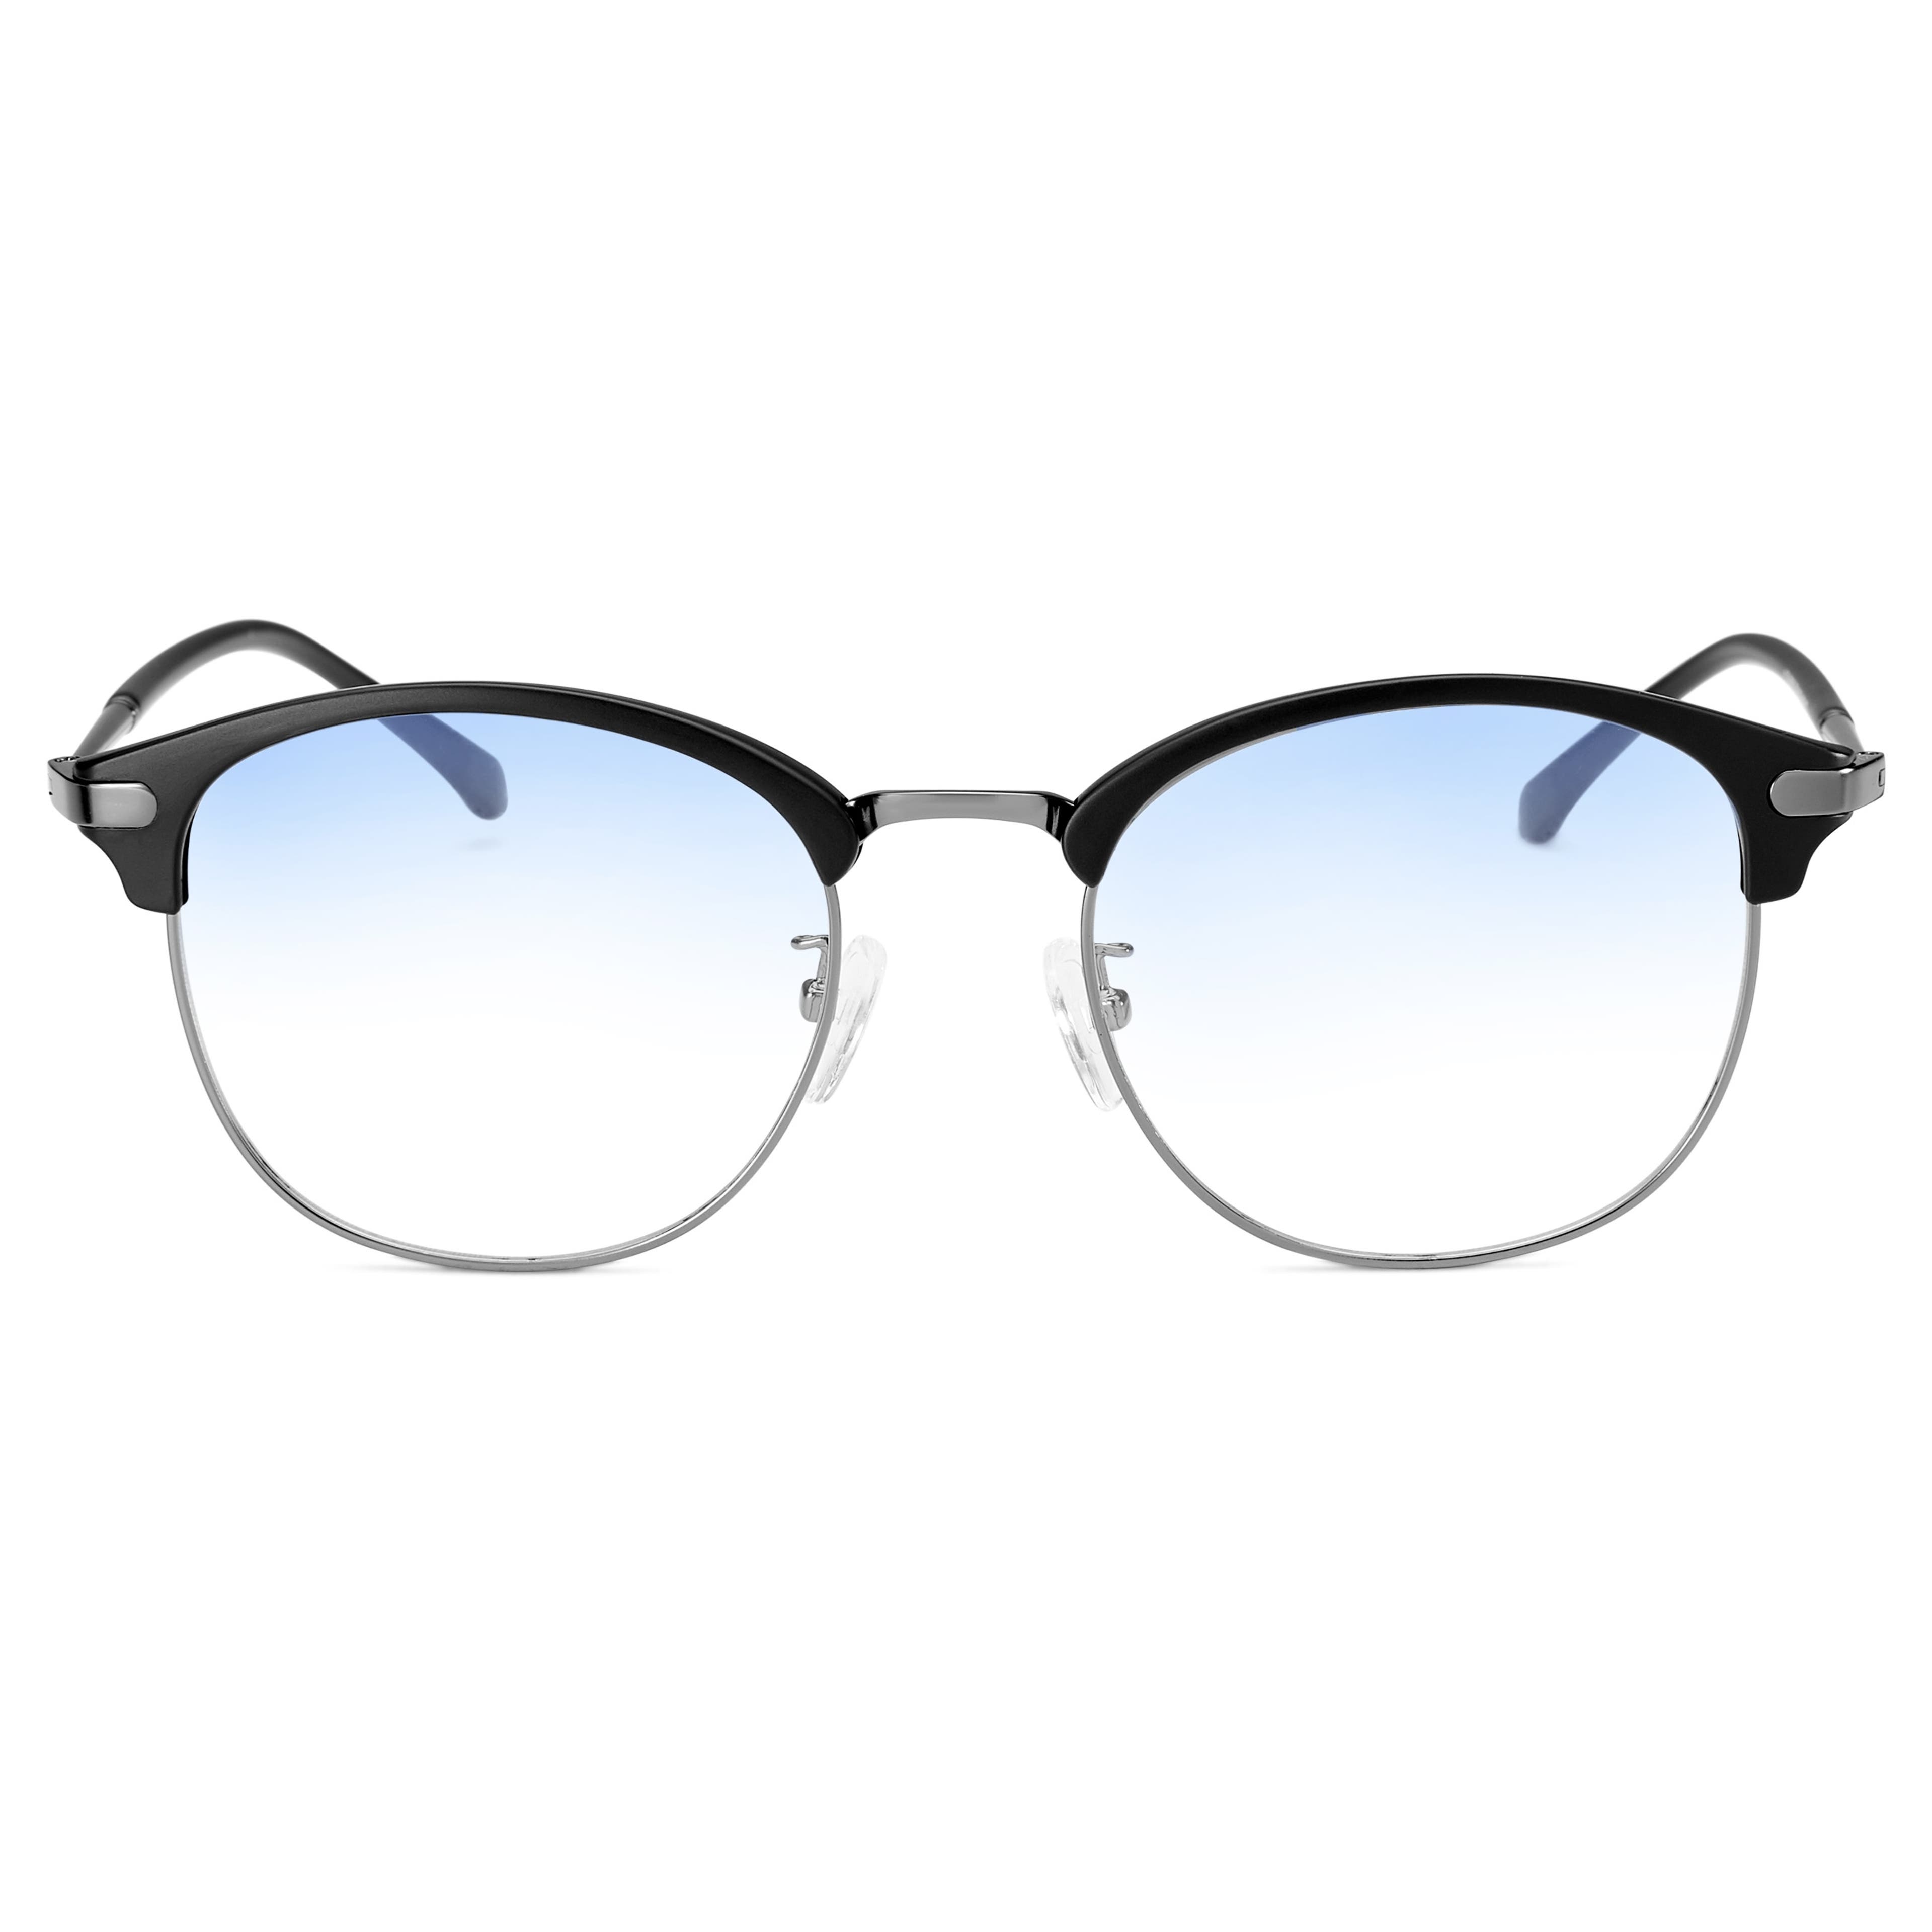 Black & Gunmetal Atrium Clear Lens Glasses